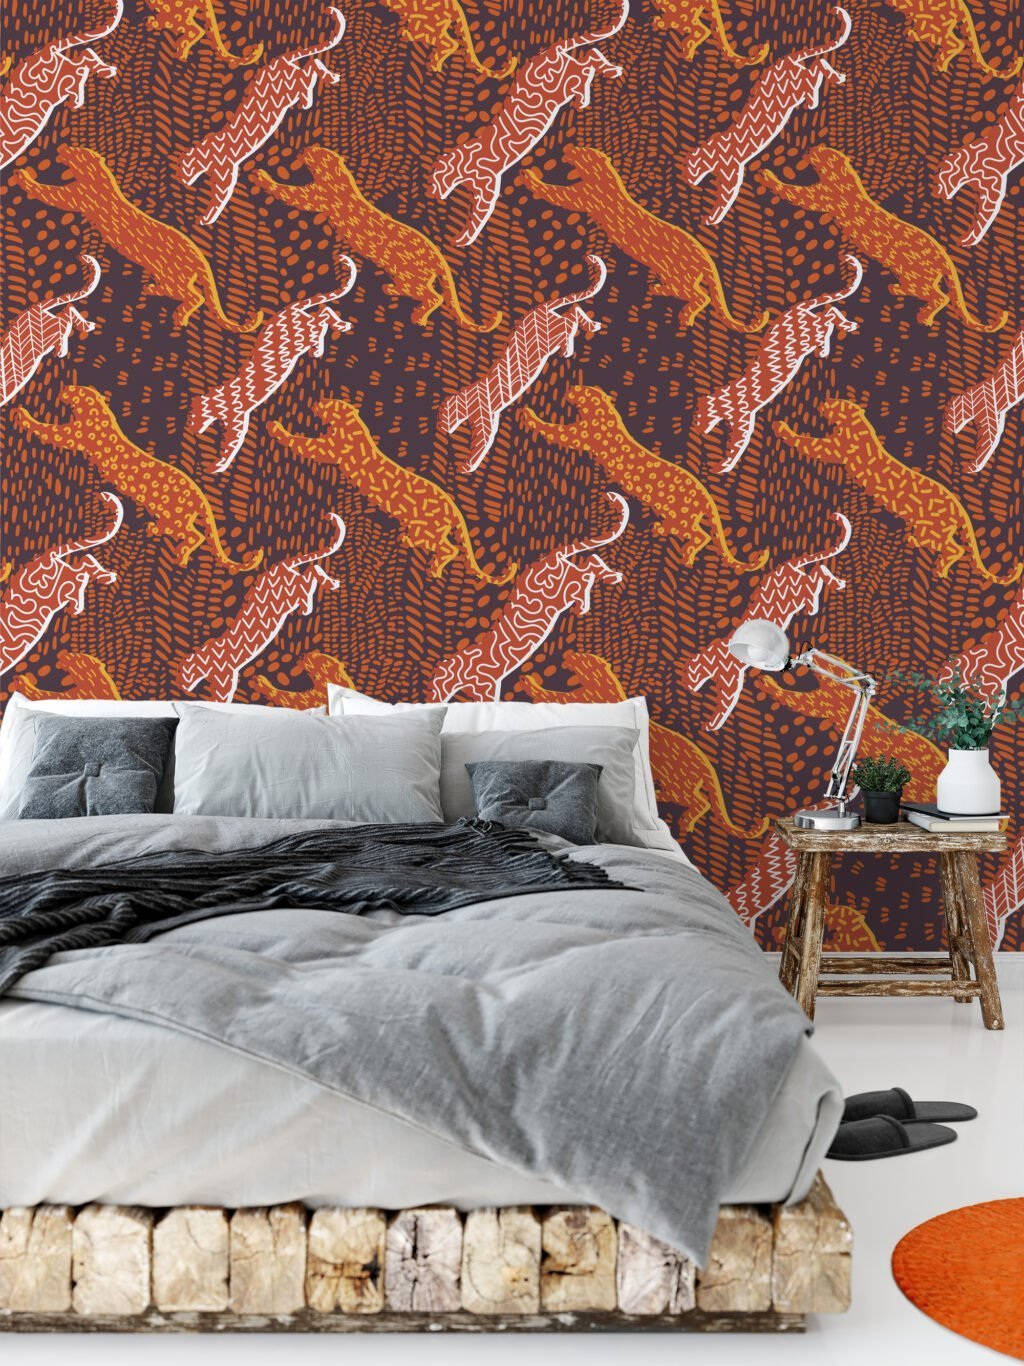 Abstract Tiger Leopard Pattern Illustration Wallpaper, Warm-Toned Modern Peel & Stick Wall Mural